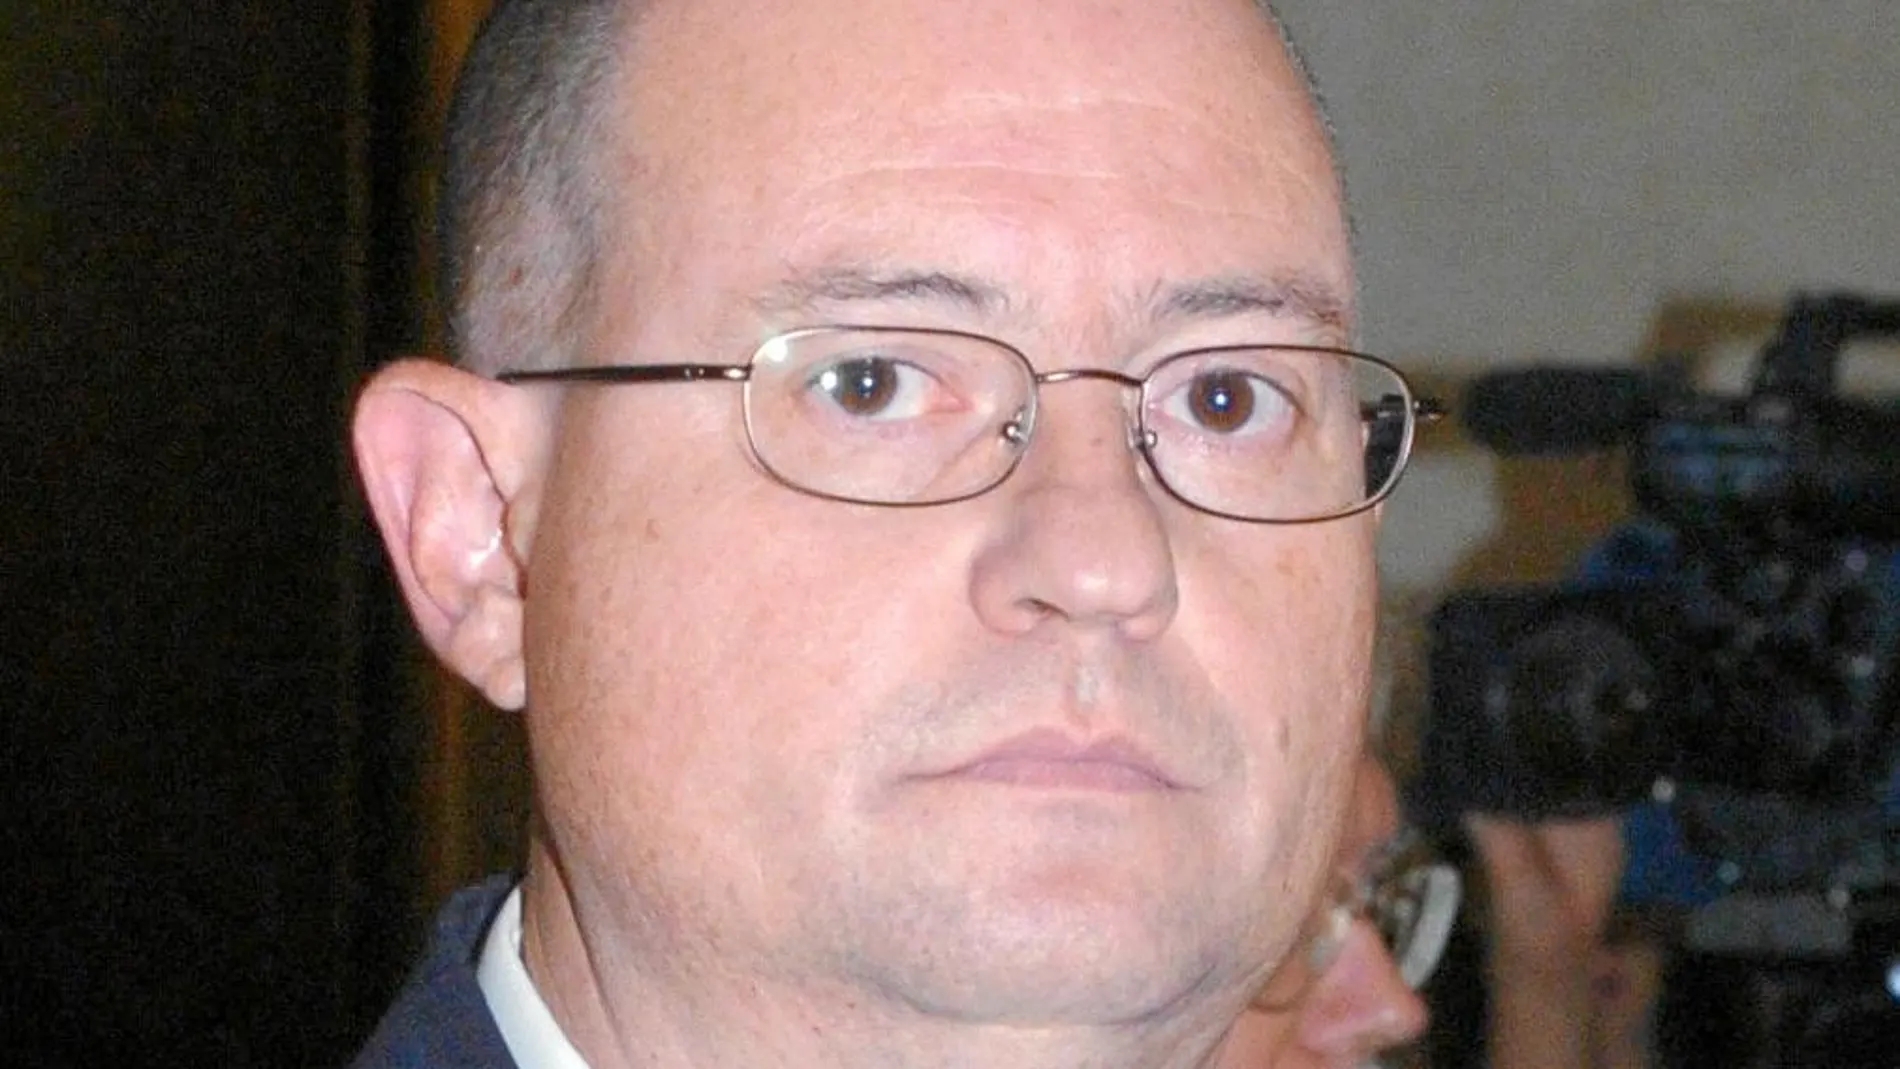 Pamiés advirtió a Elosua en mayo de 2006, según Ruz, de la operación contra ETA en Irún